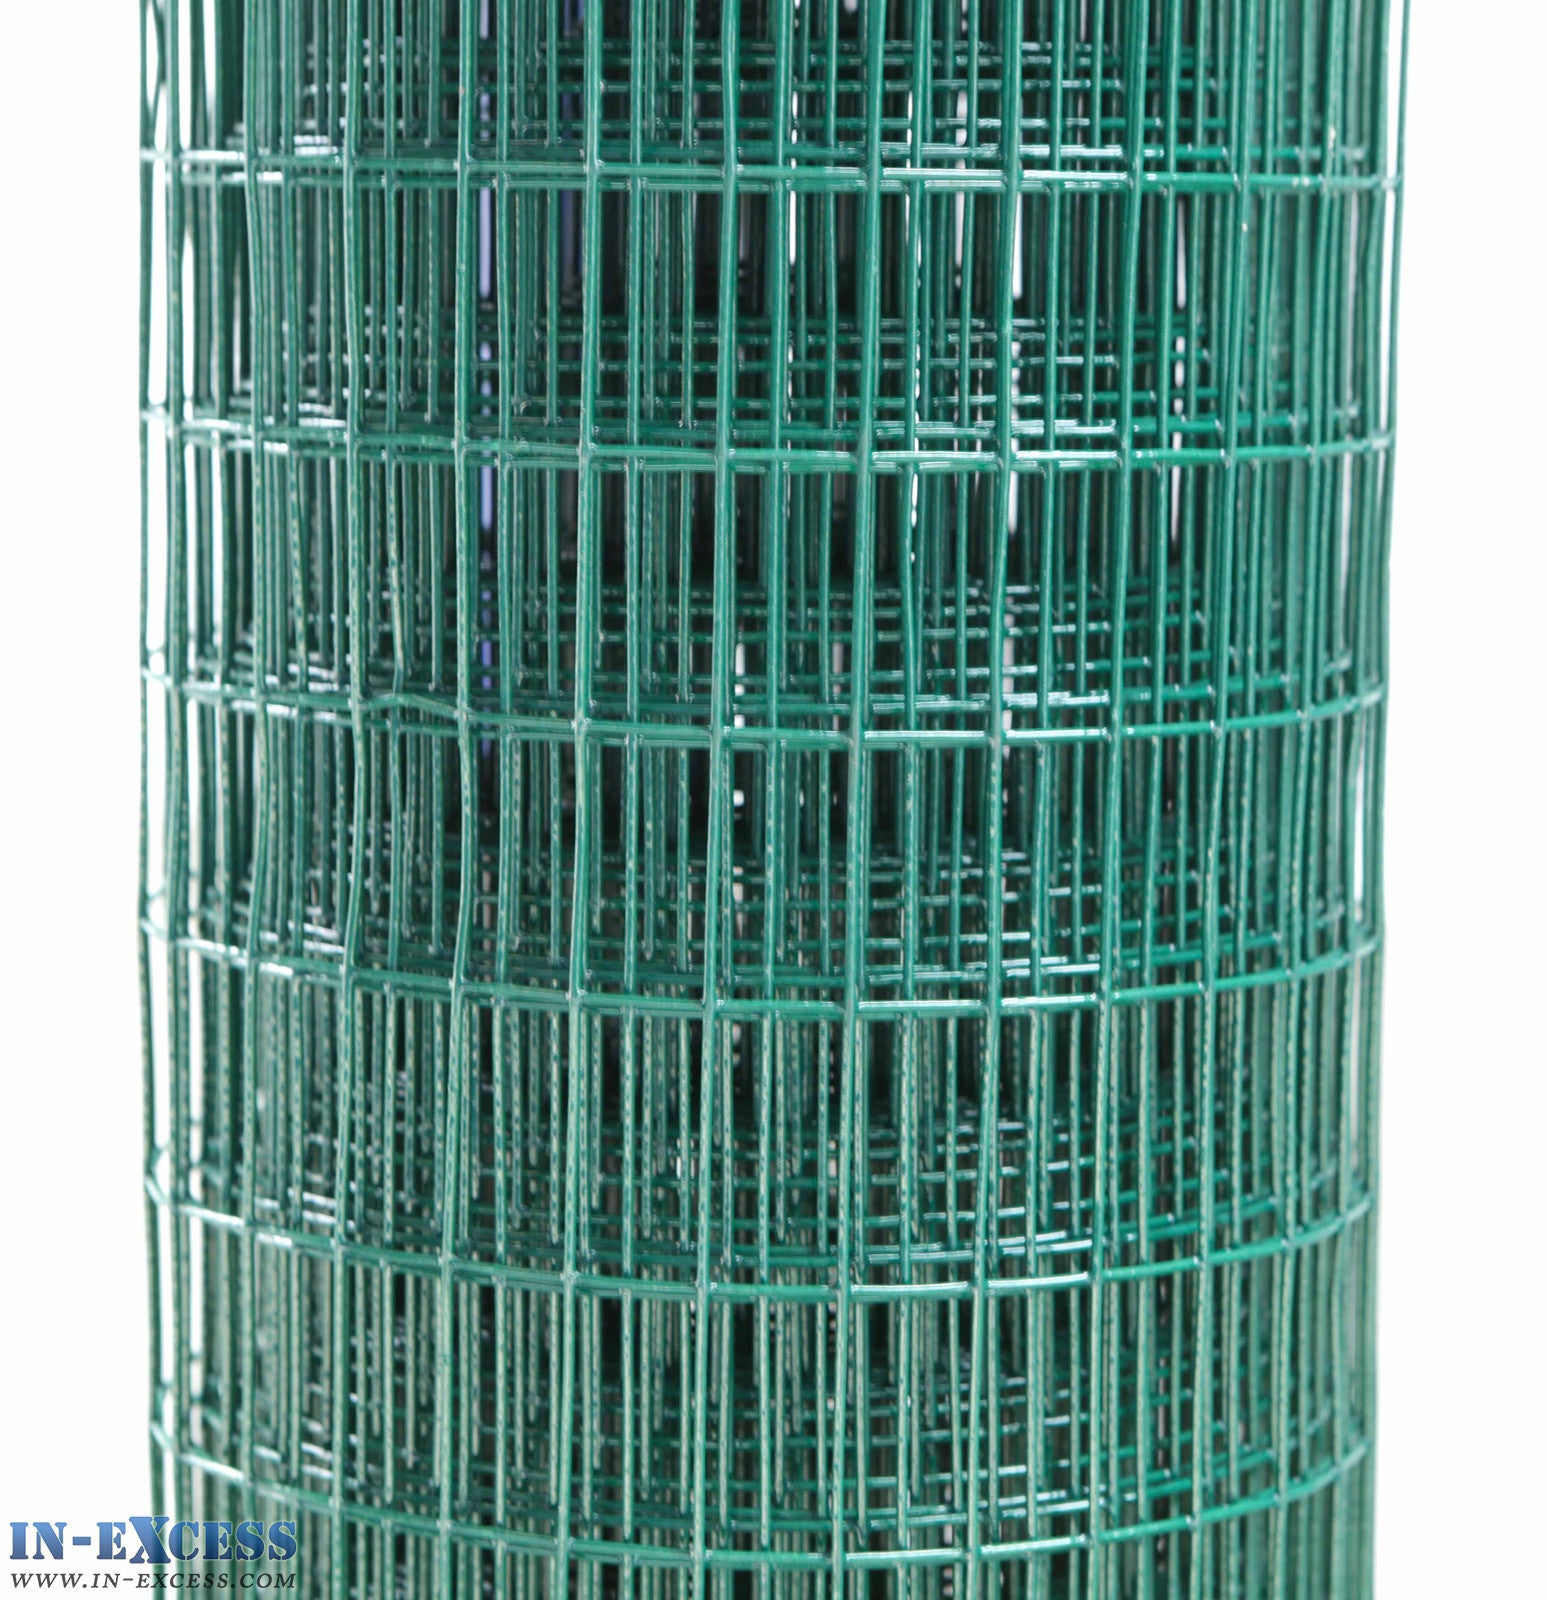 PVC 18ga Coated Wire Fence Welded Mesh Green 1/2" x 1" 0.9 x 6m